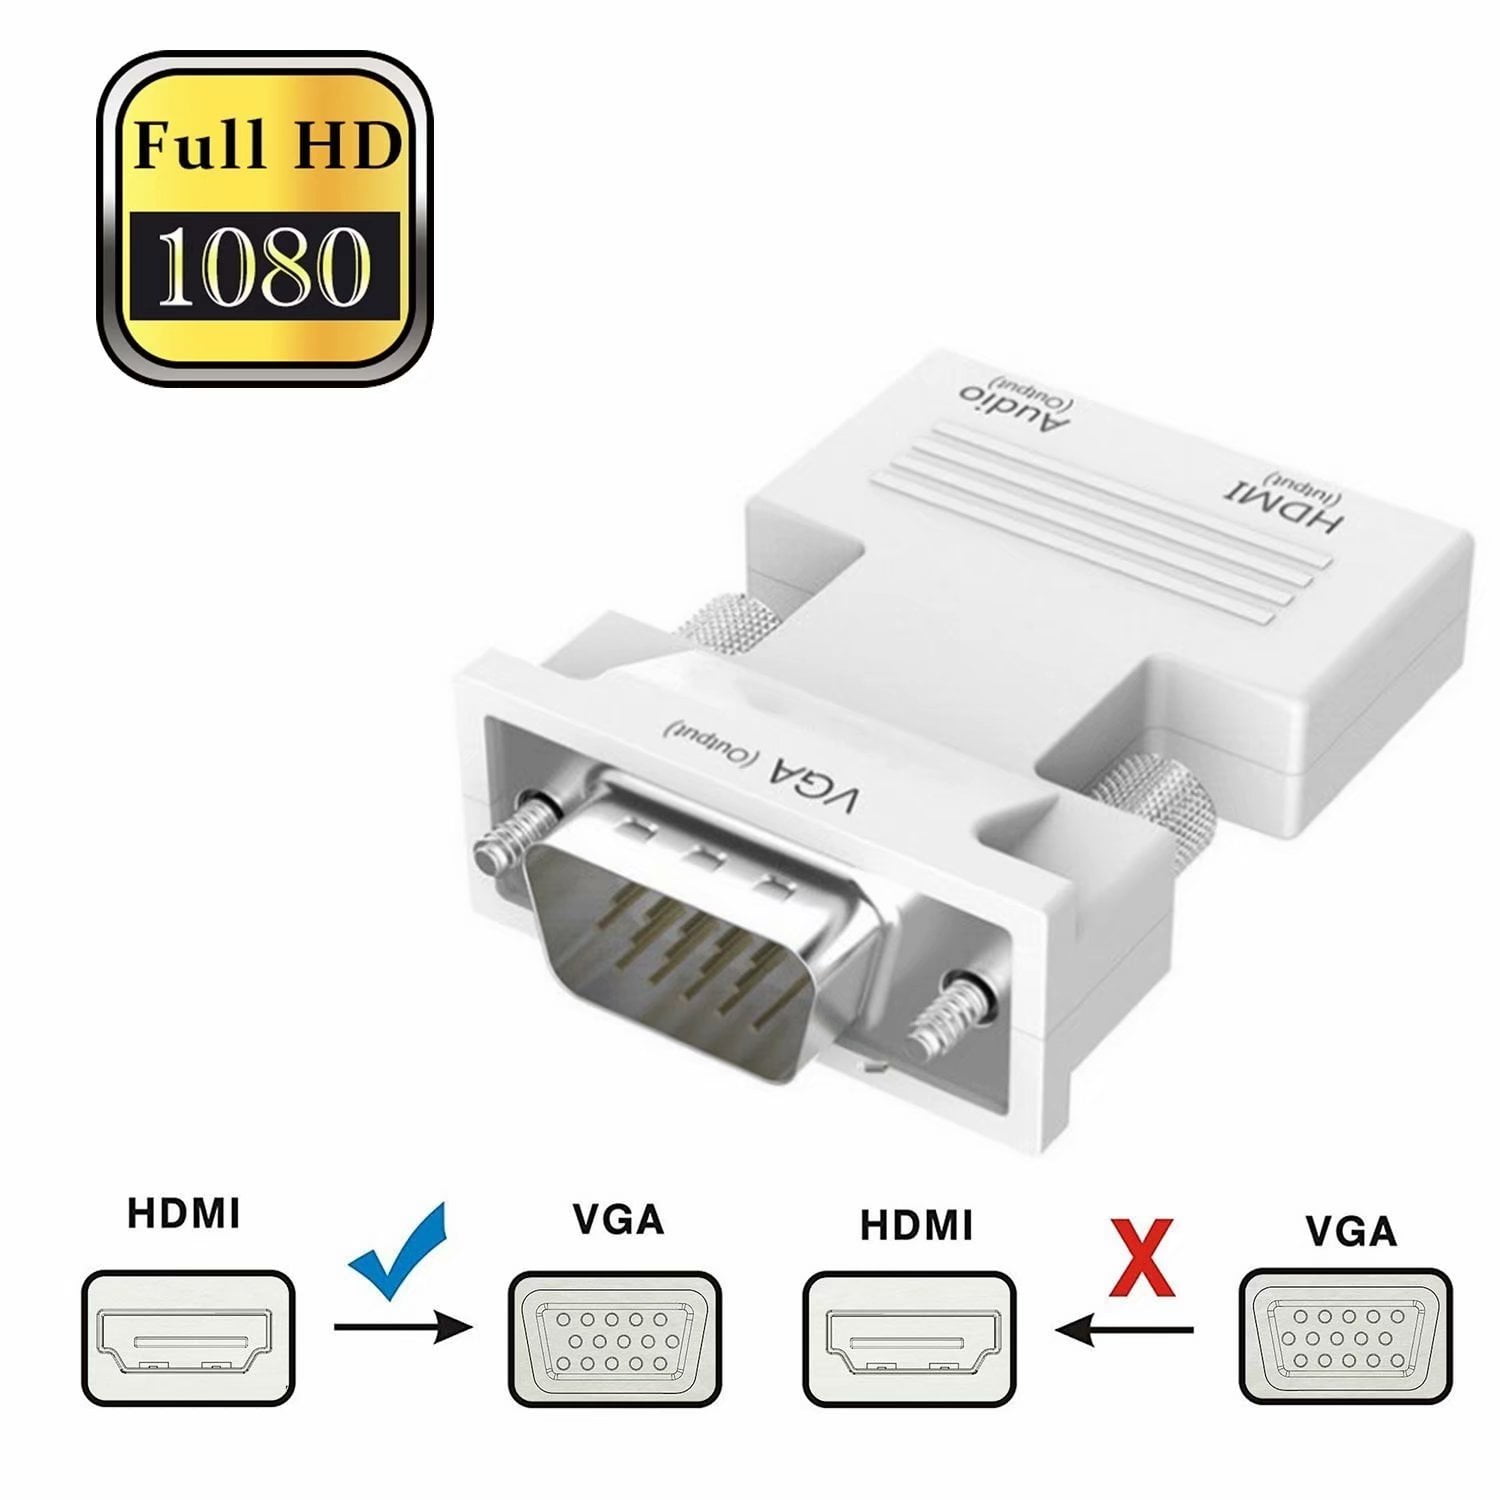 Basics HL-007347 HDMI Input to DVI Output (Not VGA) Adapter